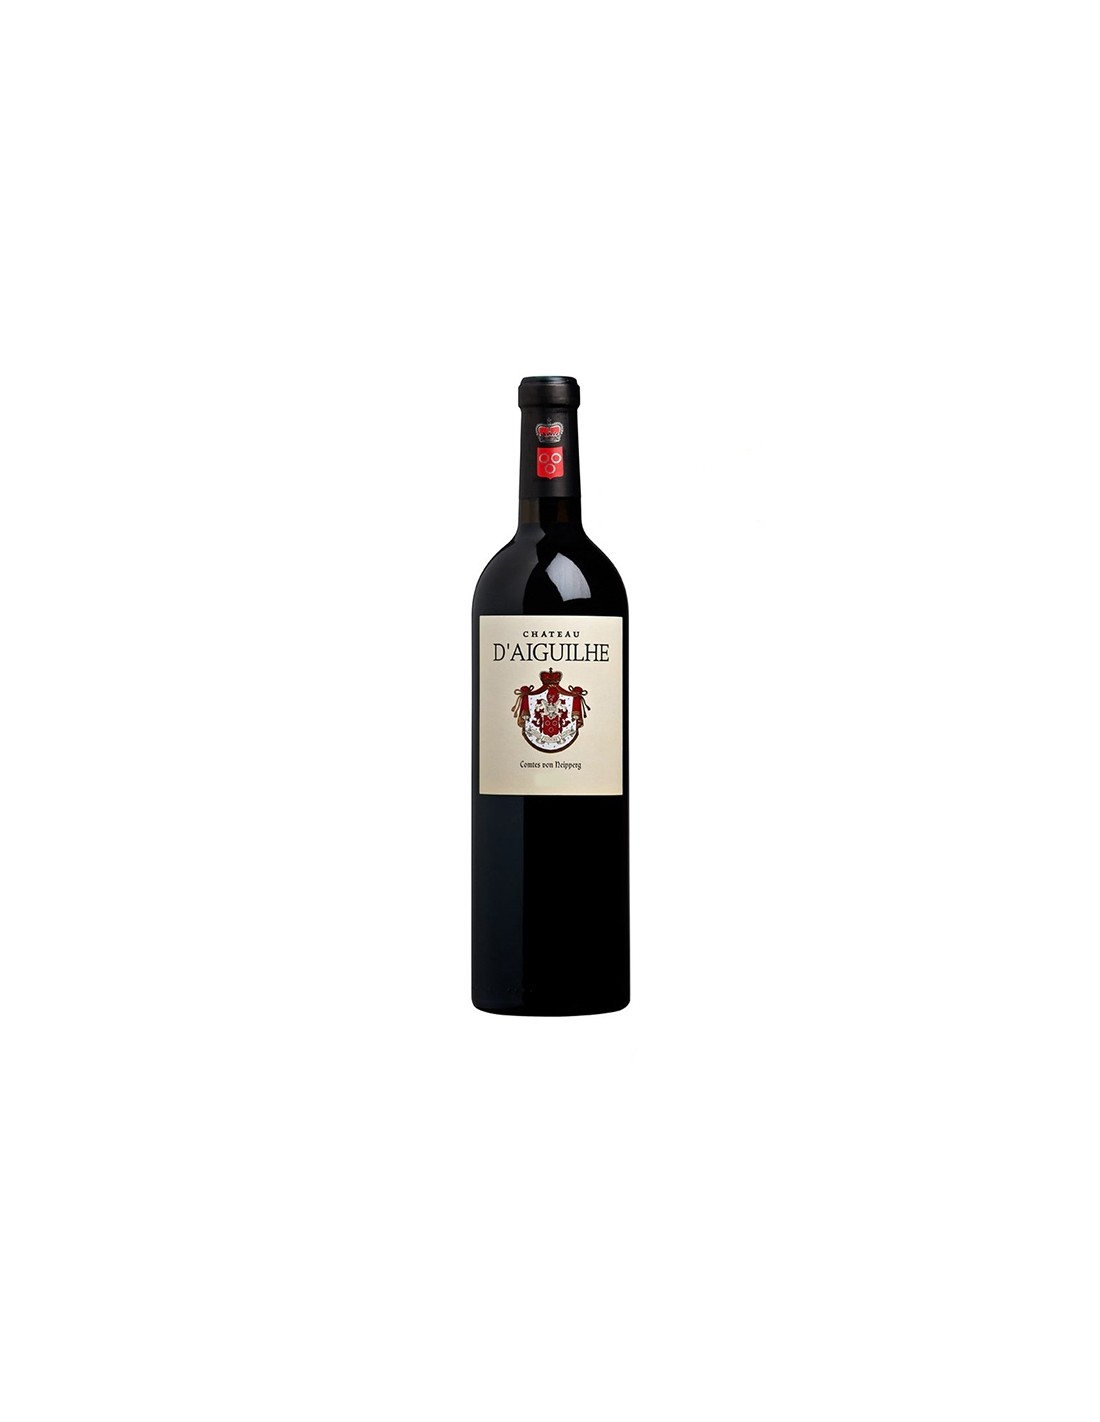 Vin rosu sec, Château d’Aiguilhe, 0.75L, 14% alc., Franta alcooldiscount.ro